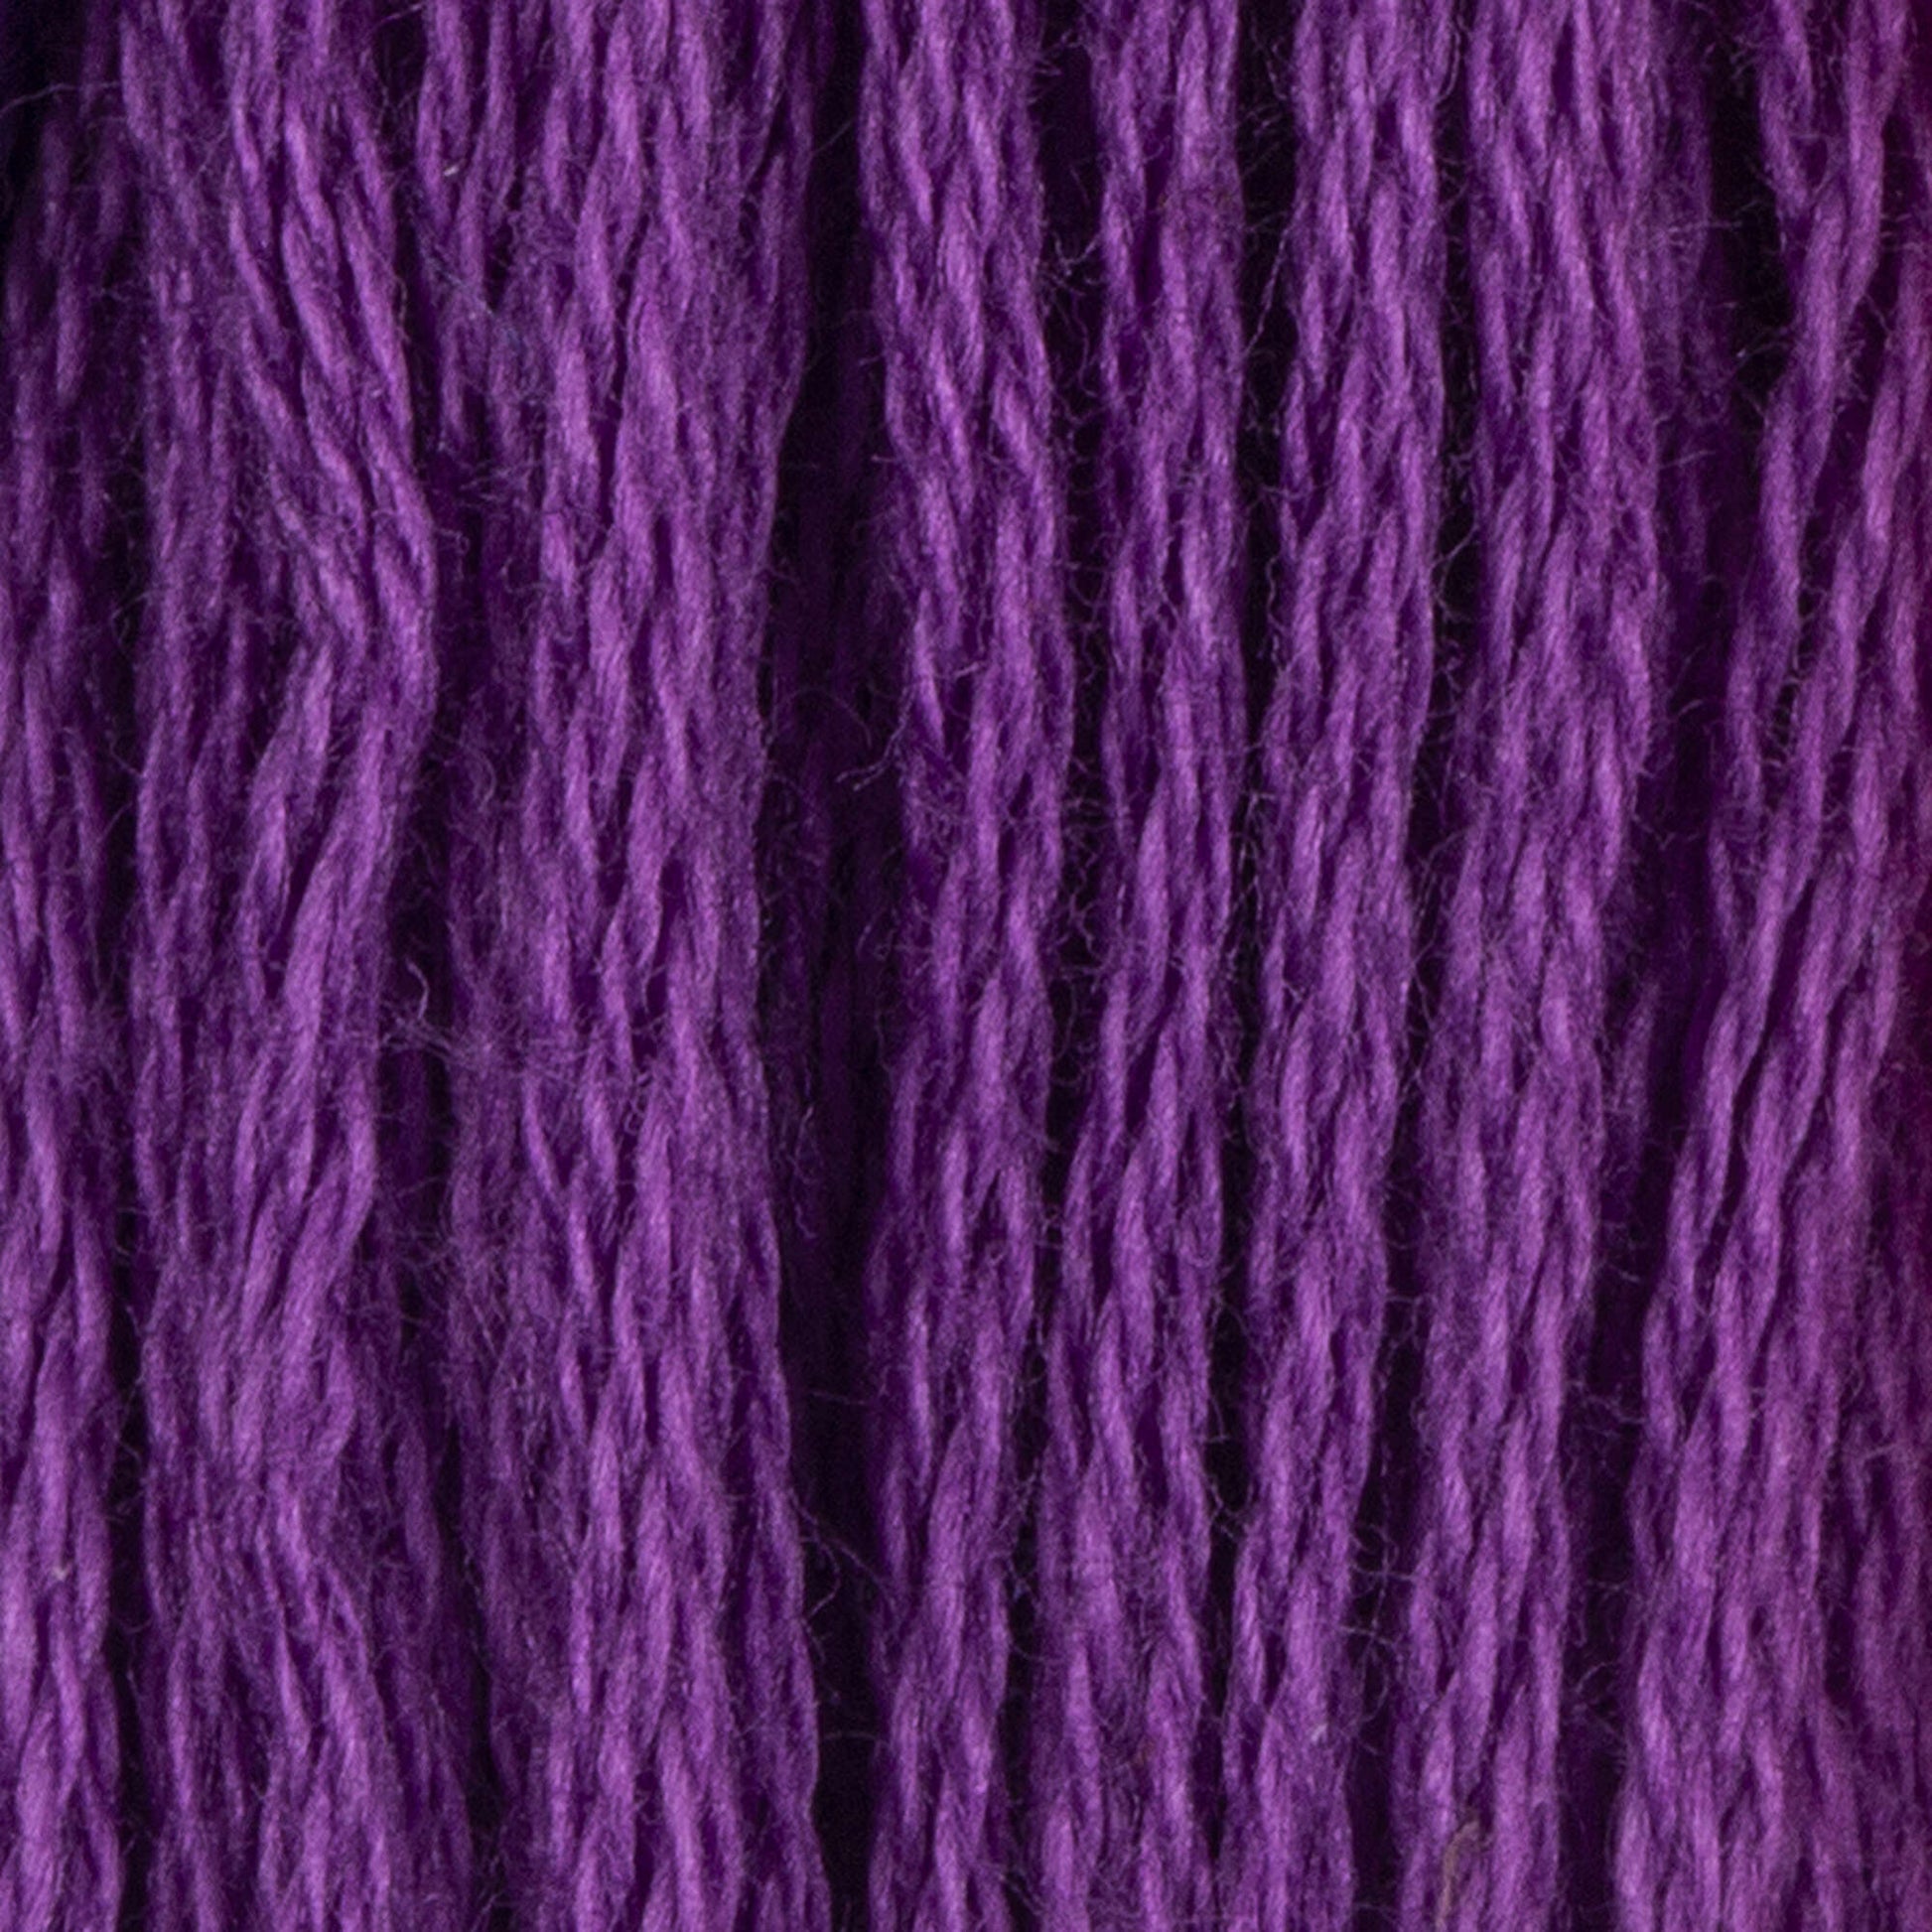 Coats & Clark Cotton Embroidery Floss Lavender Very Dark